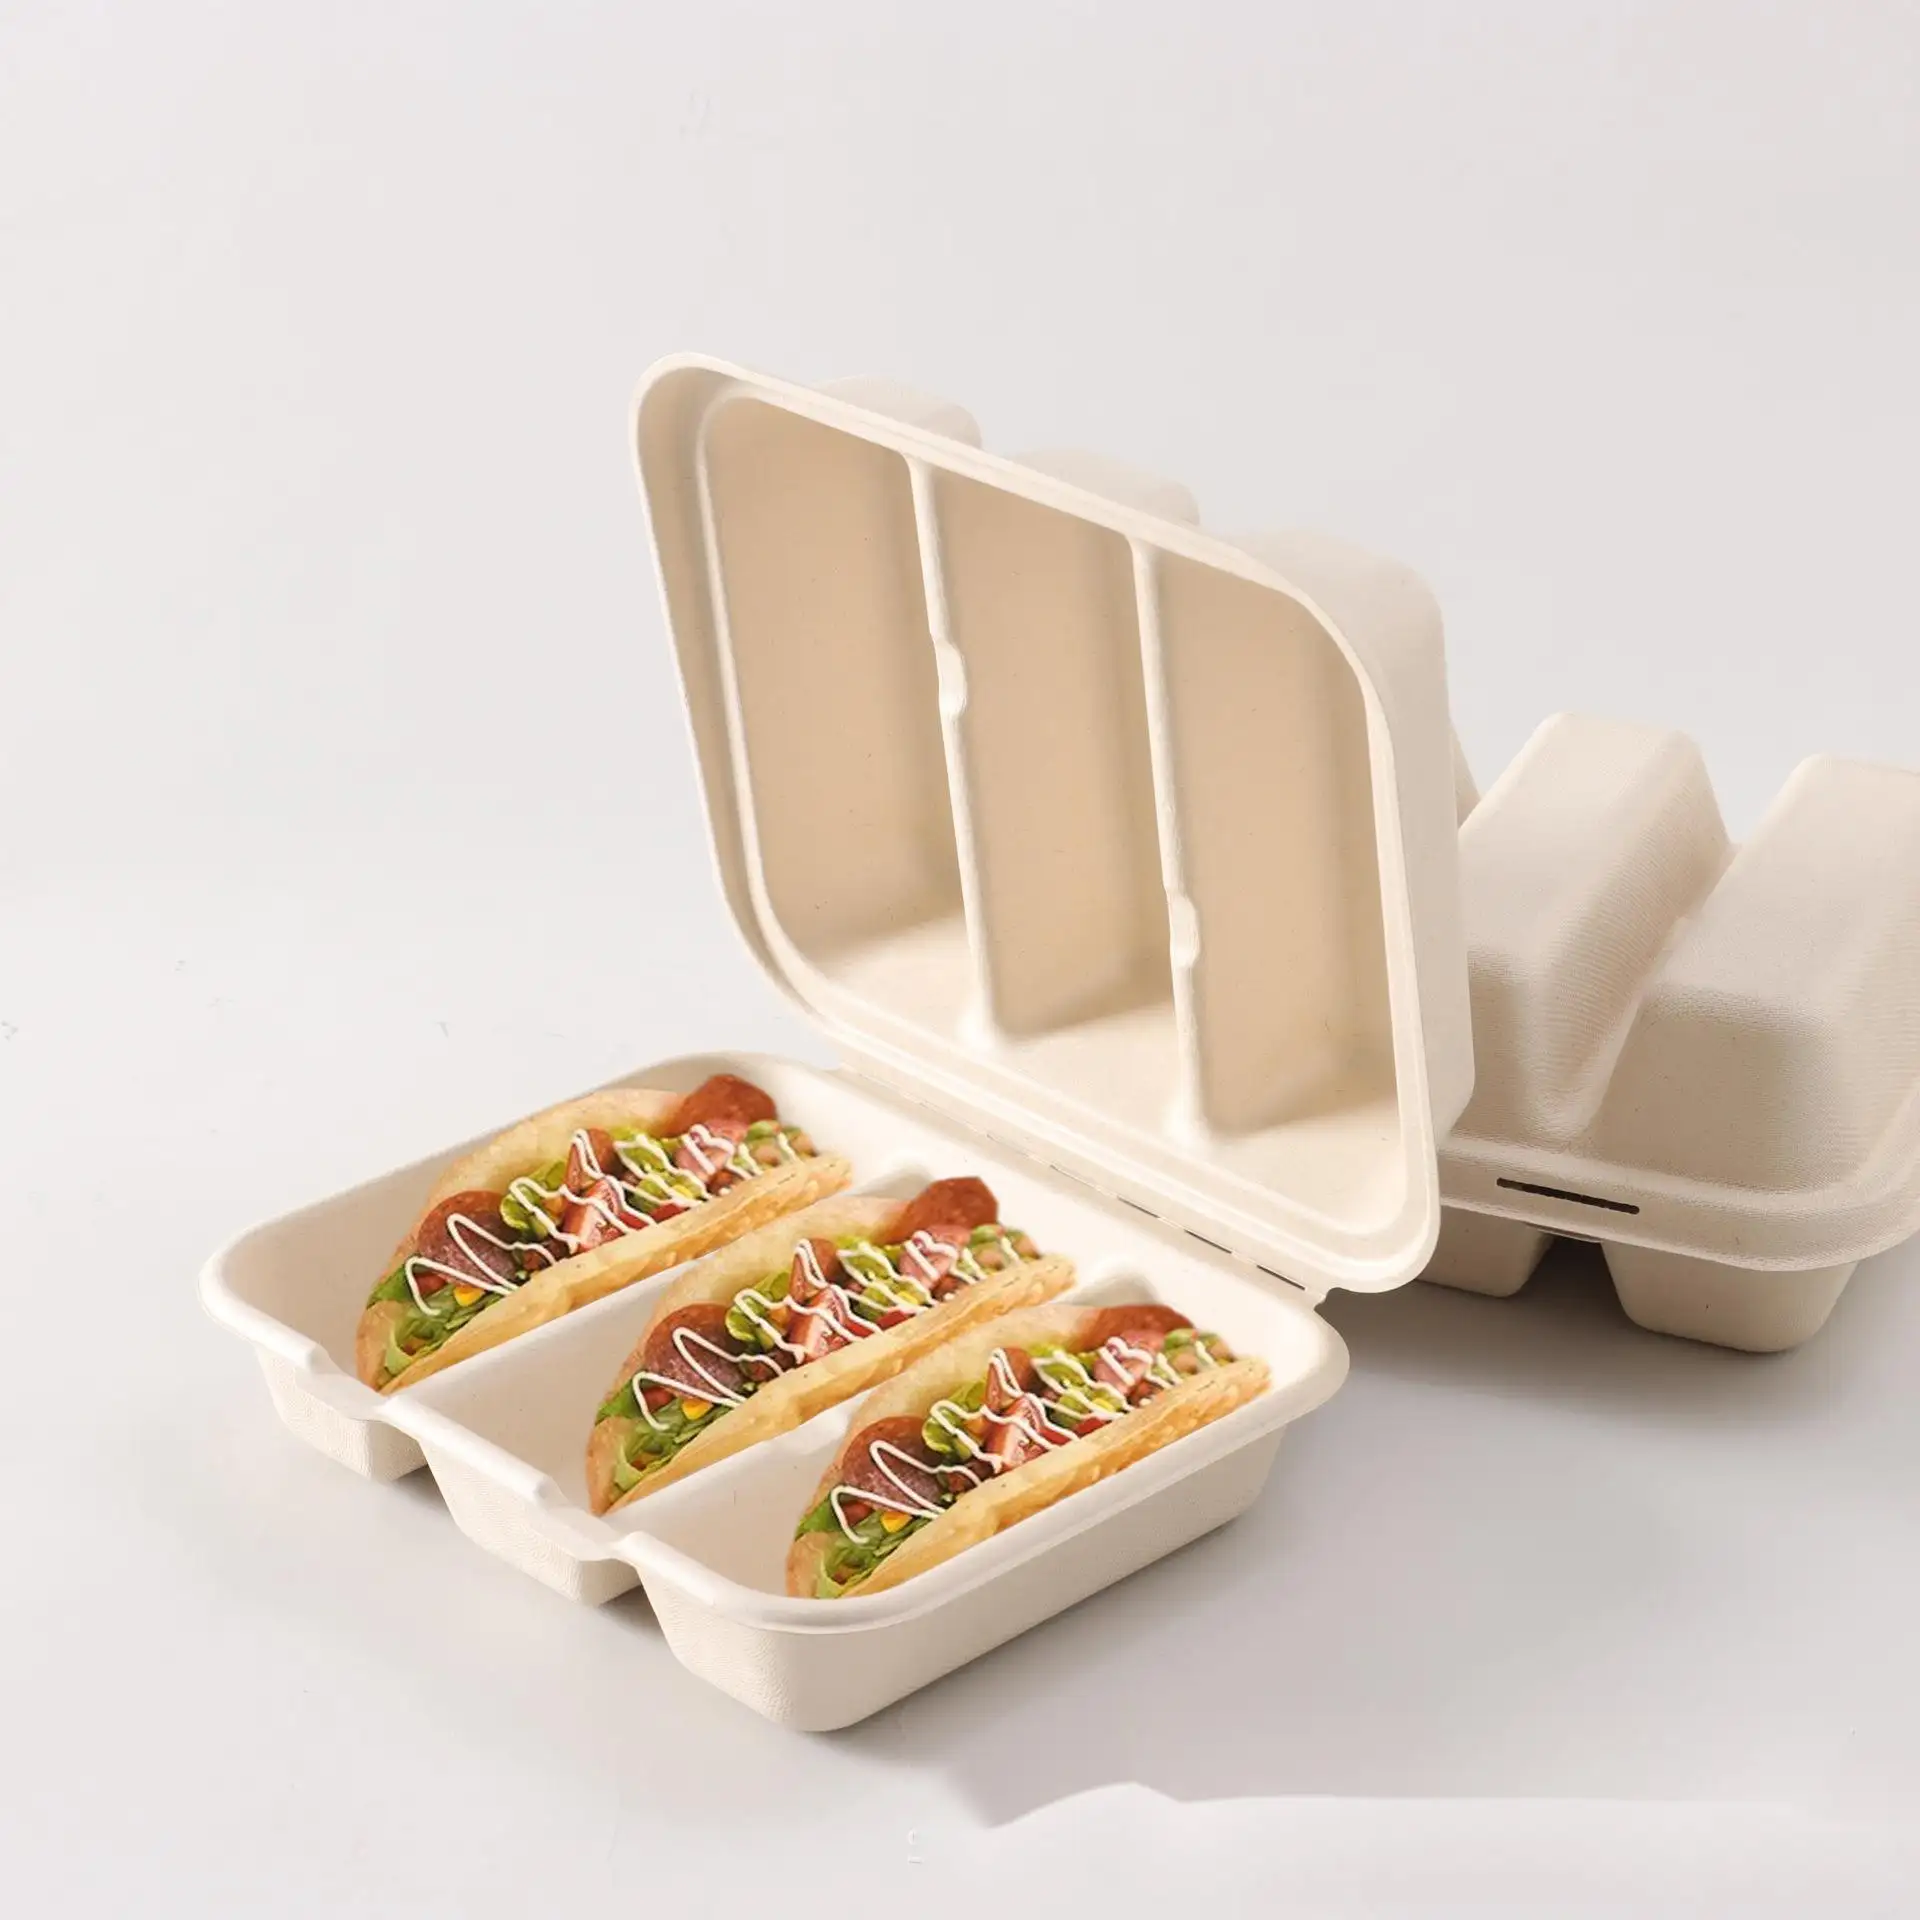 Caja de embalaje desechable de 3 compartimentos de pulpa de bagazo biodegradable barata personalizada de fábrica